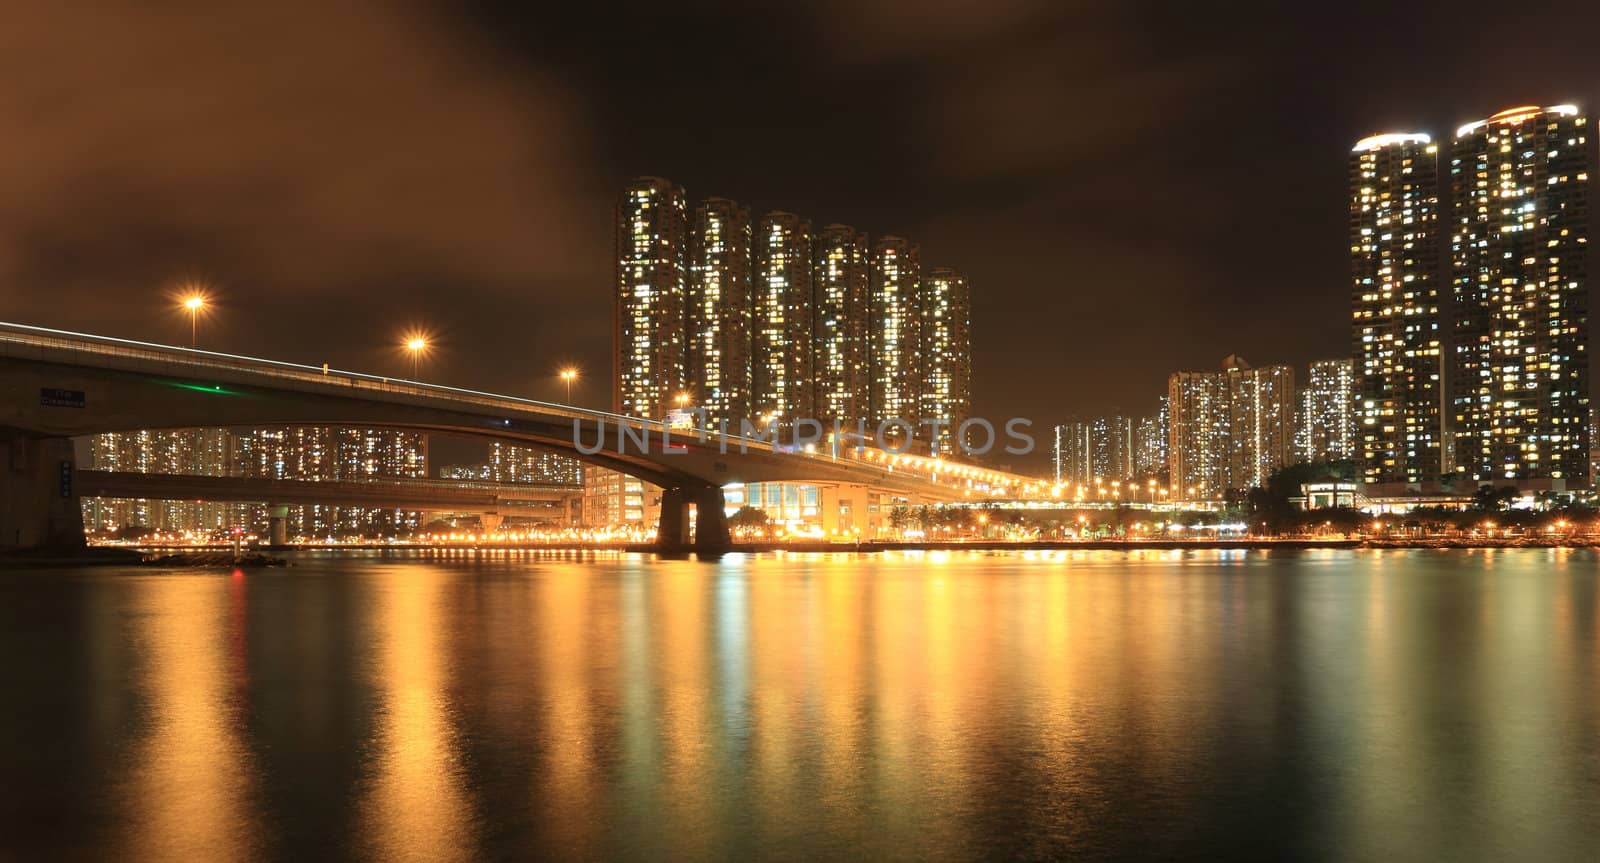 Residential Apartment Buildings in Hong Kong at night by leungchopan